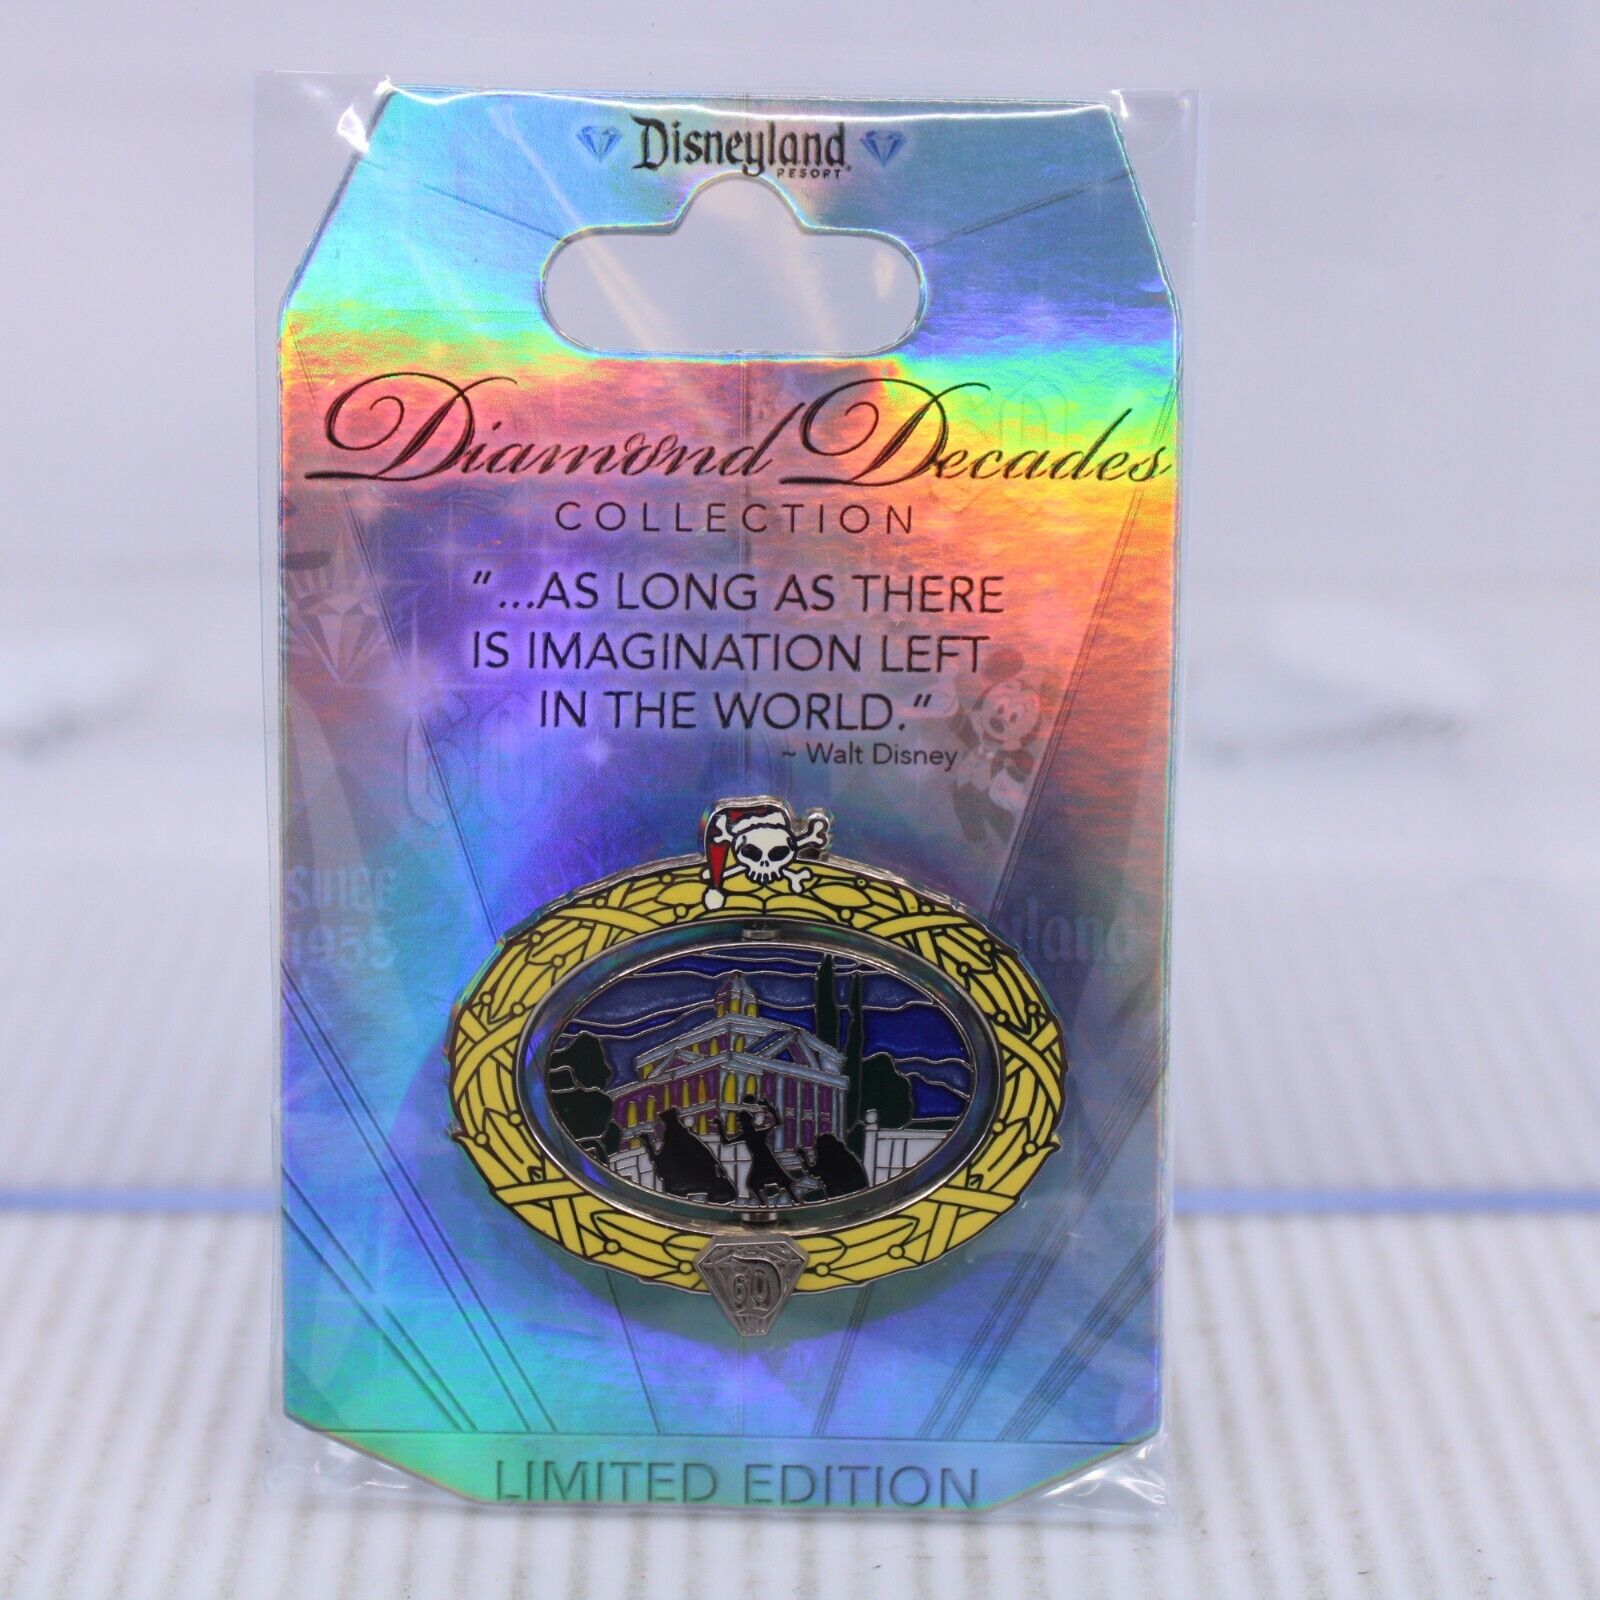 C2 Disney DLR Disneyland LE Pin 60th Anniversary Diamond Decades Haunted Mansion